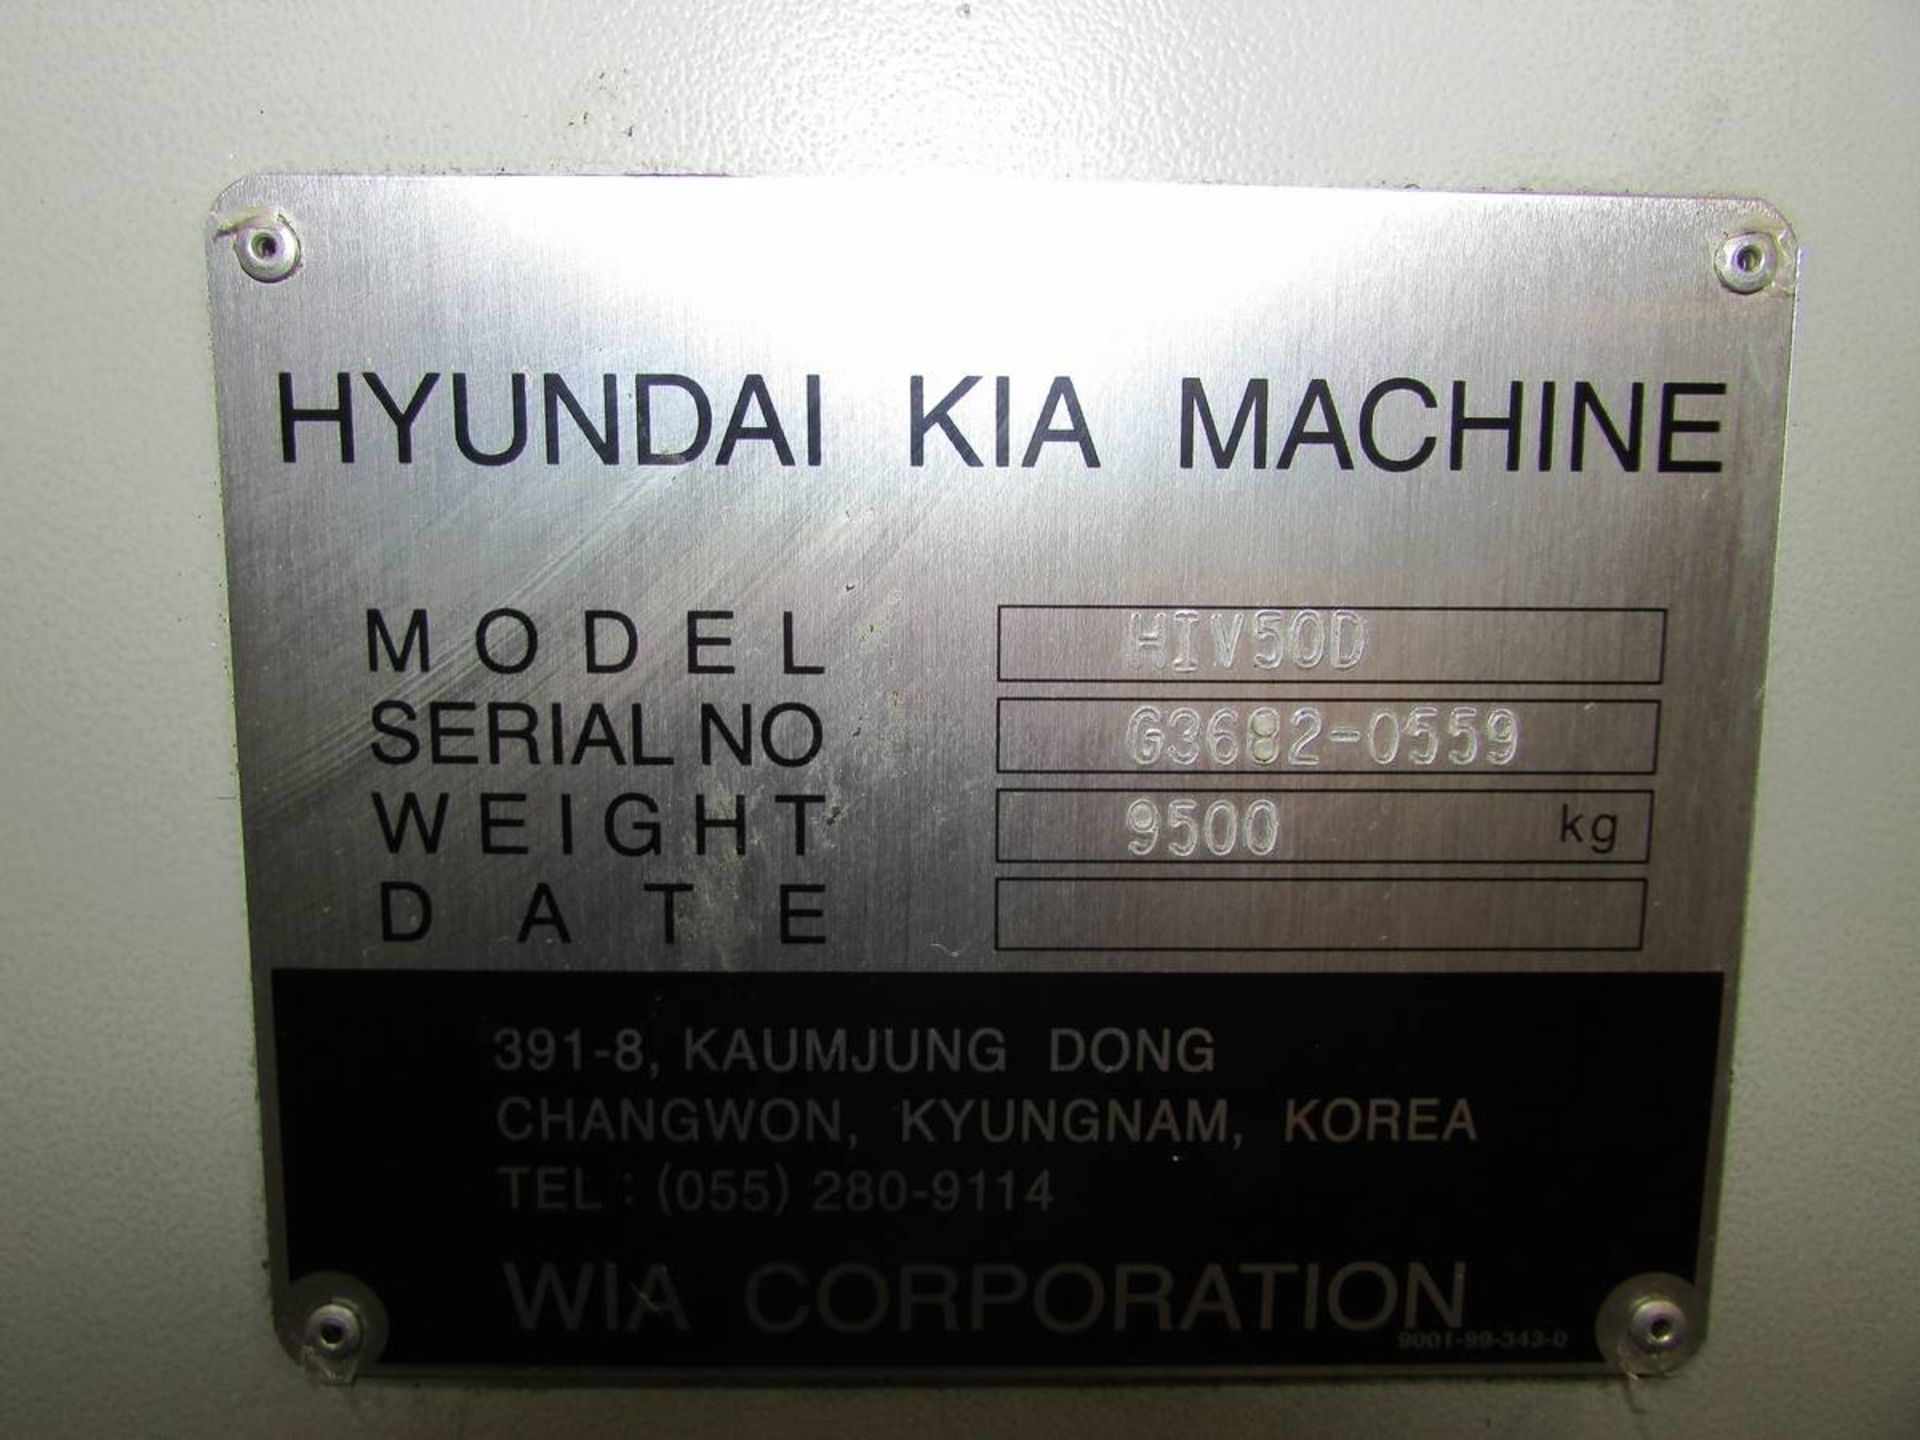 2009 Hyundia Kia Machine HIV50D Vertical 3-Axis CNC Machining Center - Image 28 of 28